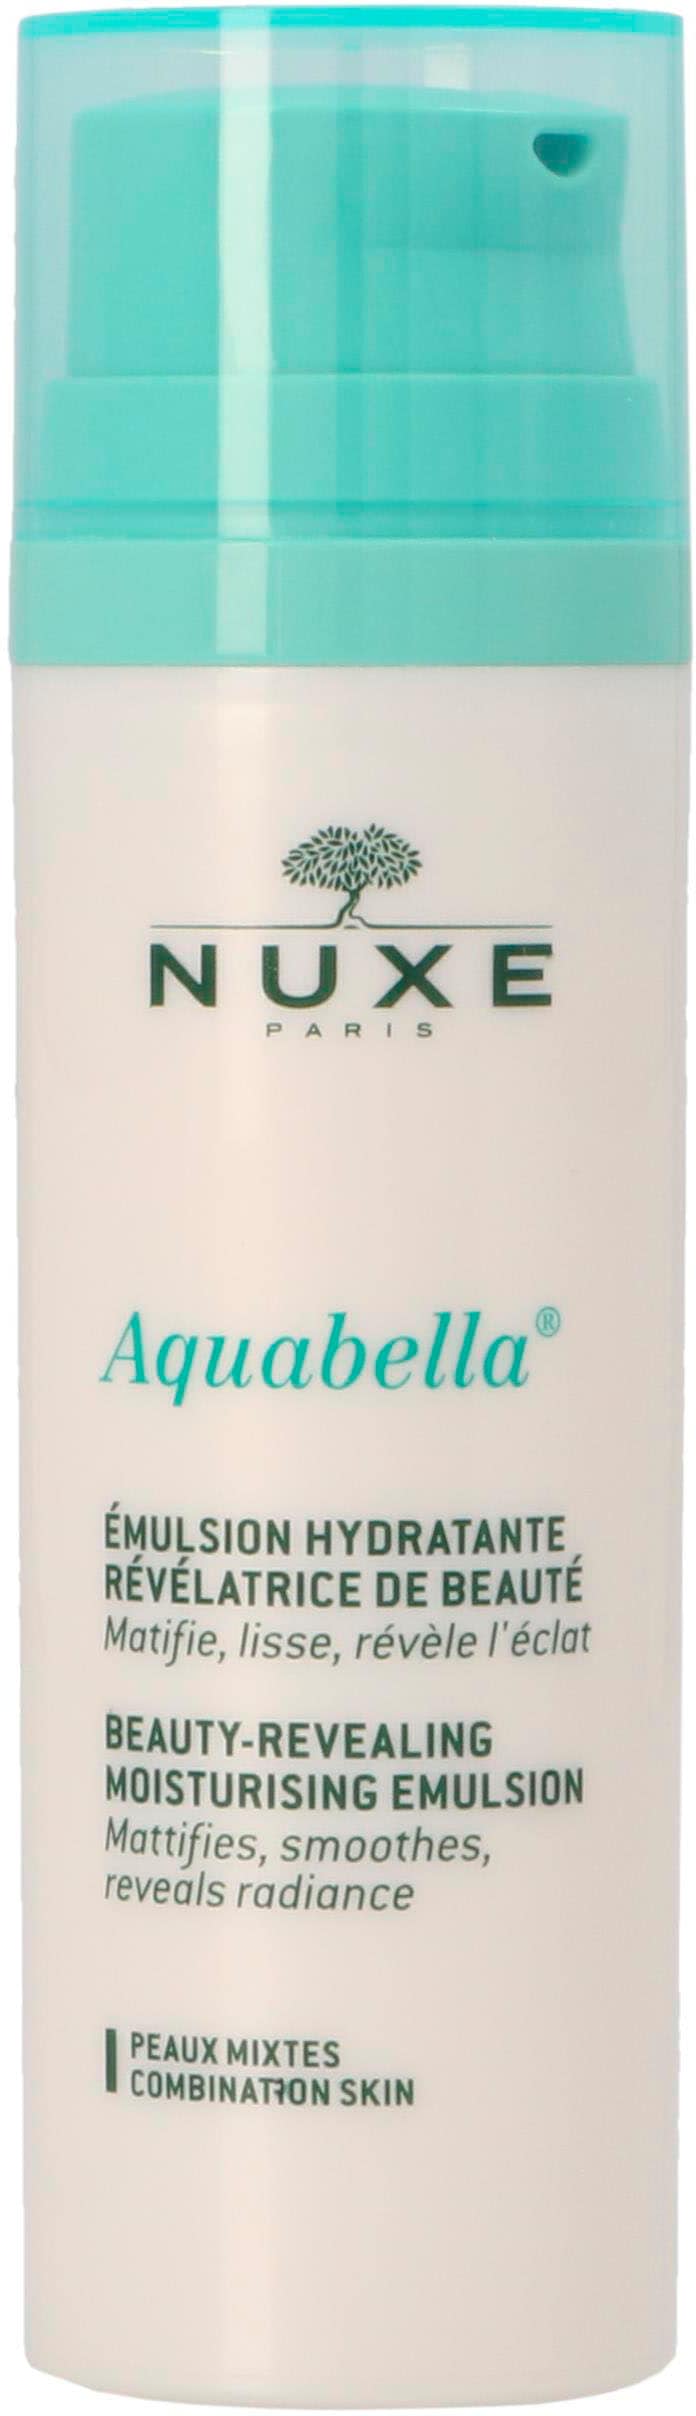 Black Friday Nuxe Gesichtsserum »Aquabella Beauty | Emulsion« Moisturizing BAUR Revealing